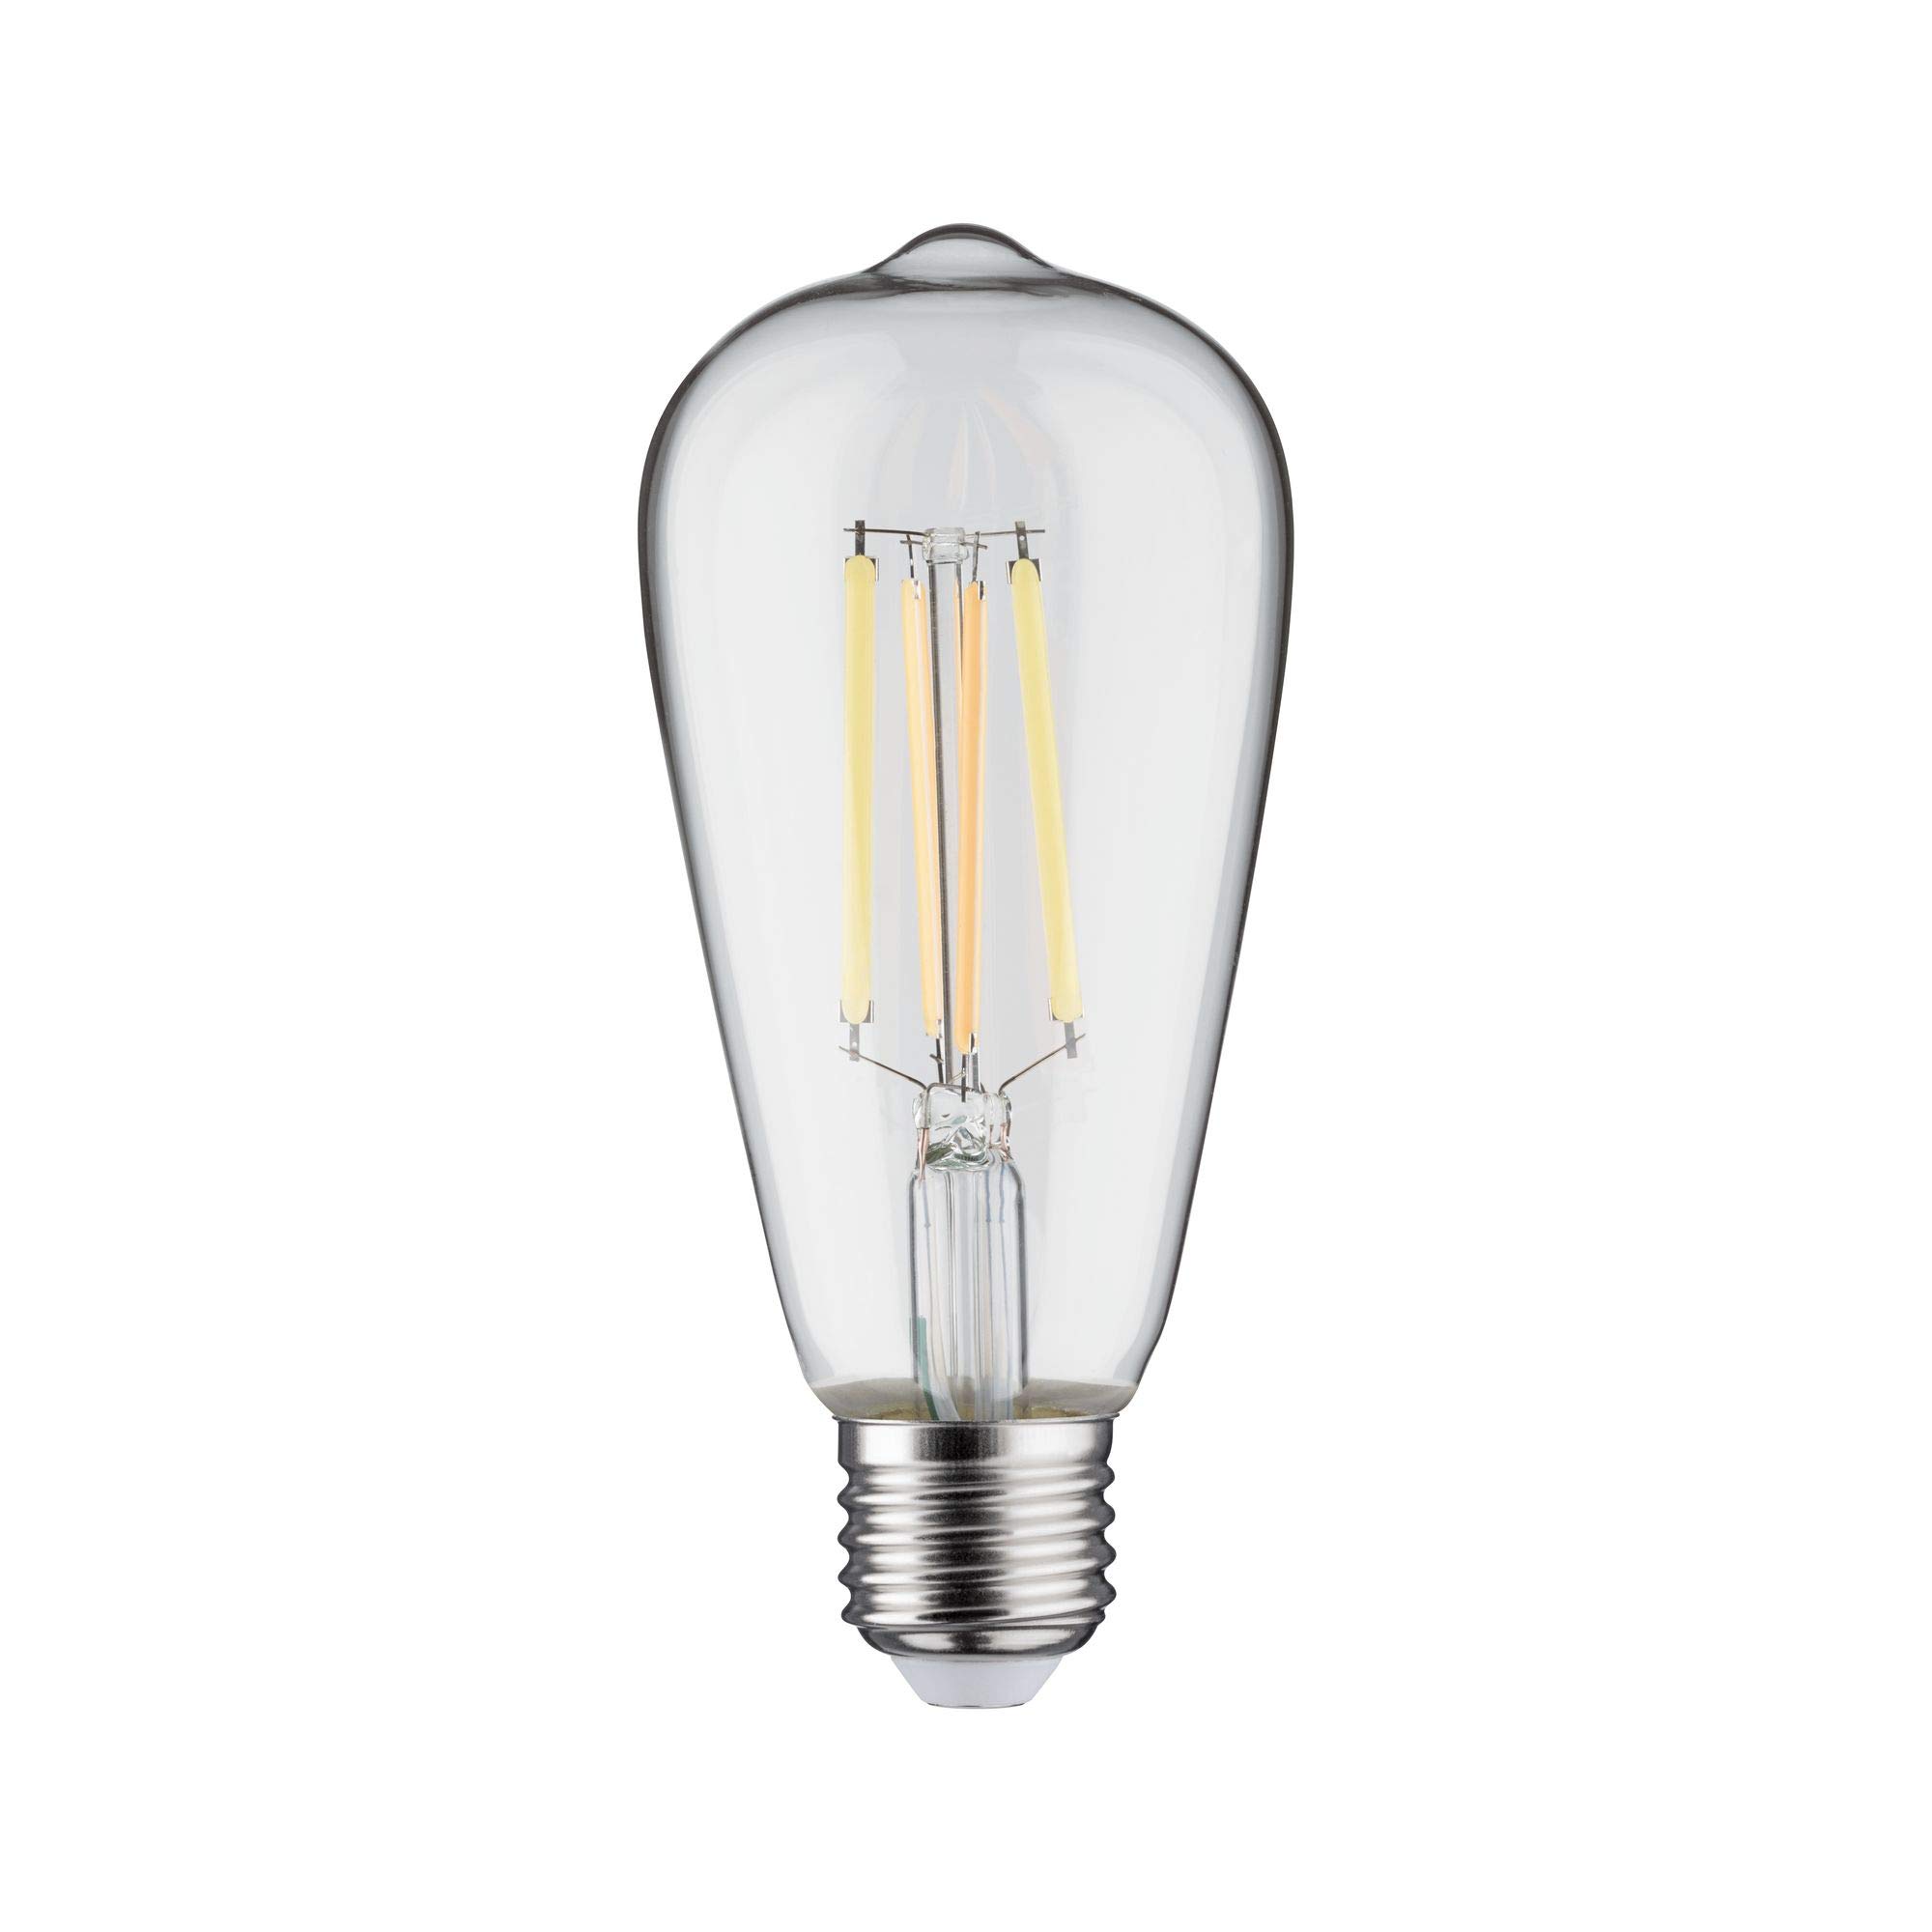 Paulmann 50395 LED Lampe Filament ST64 Kolben Smart Home Zigbee Tunable White 7W dimmbar Klar Goldlicht bis Tageslichtweiß 2200-6500K E27